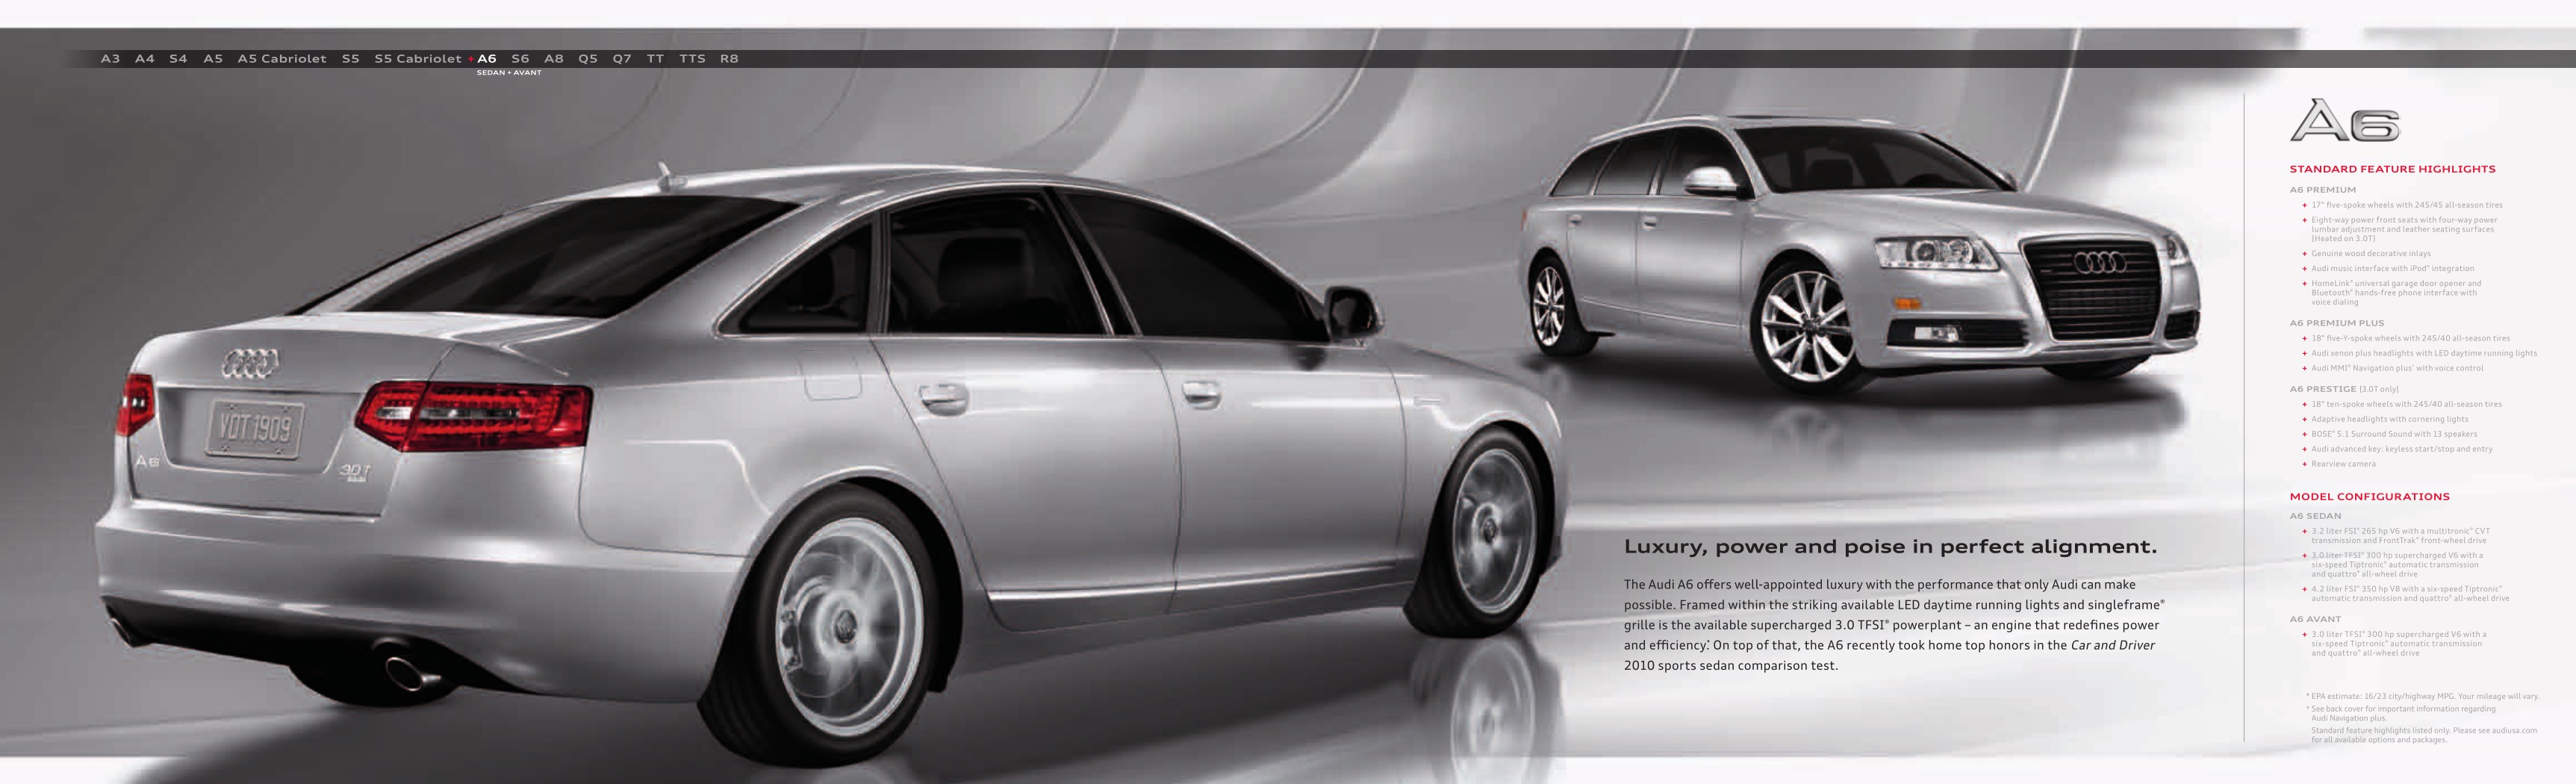 2010 Audi Brochure Page 11